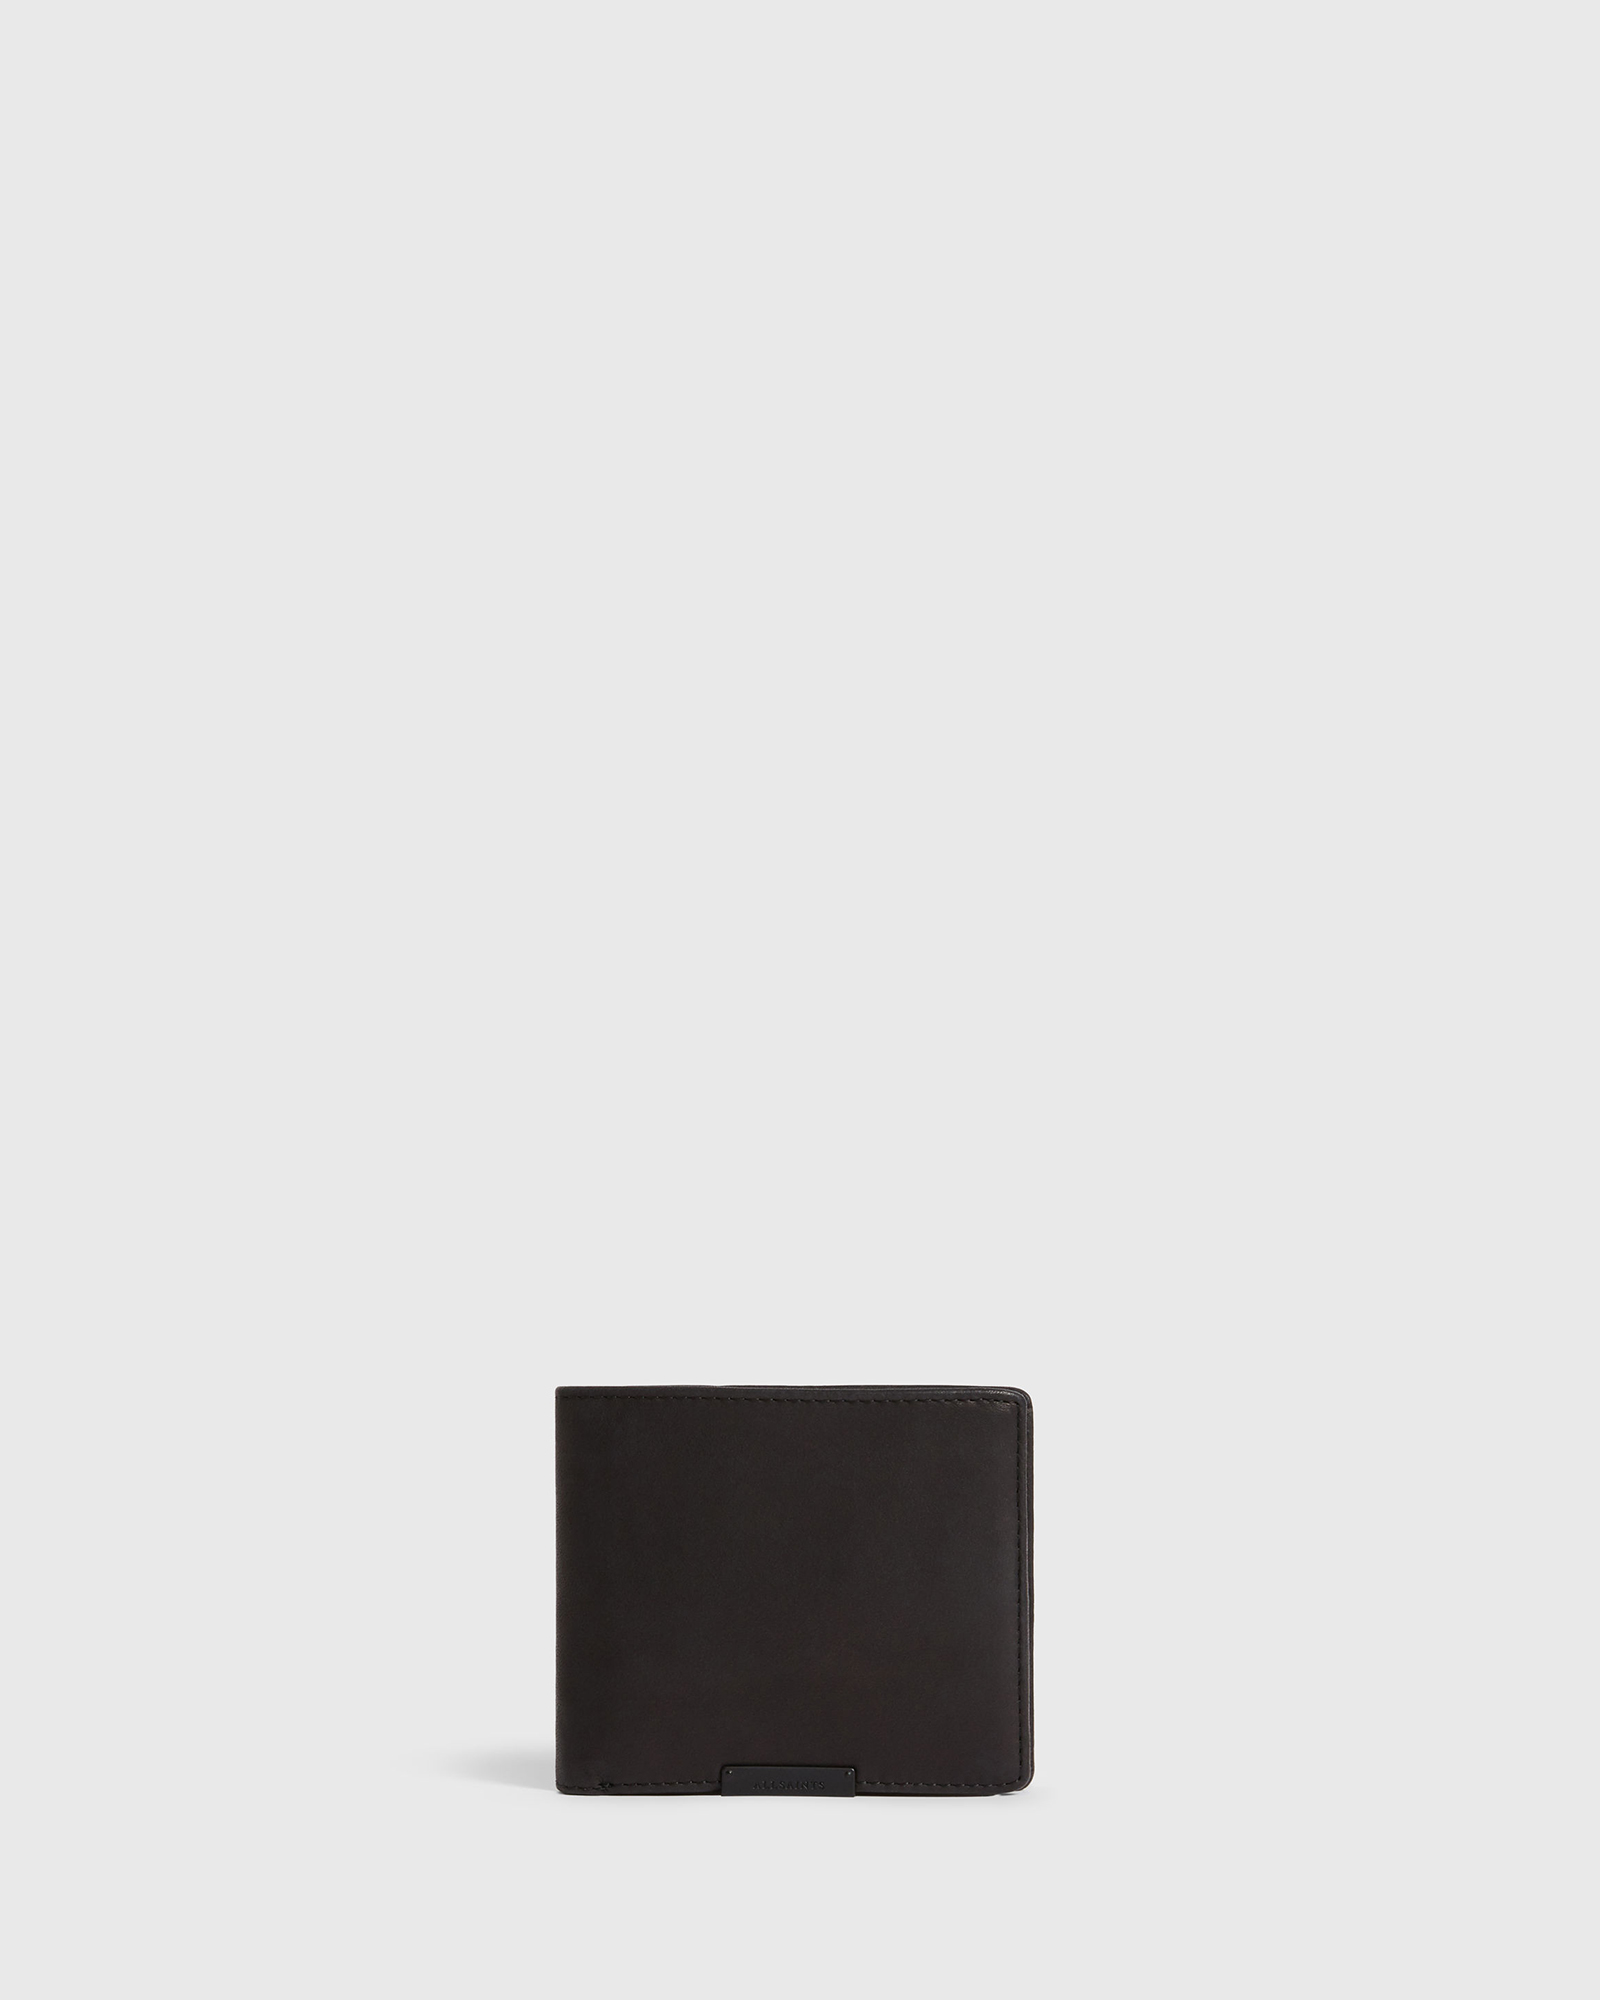 AllSaints Men's Leather Blyth Wallet, Black